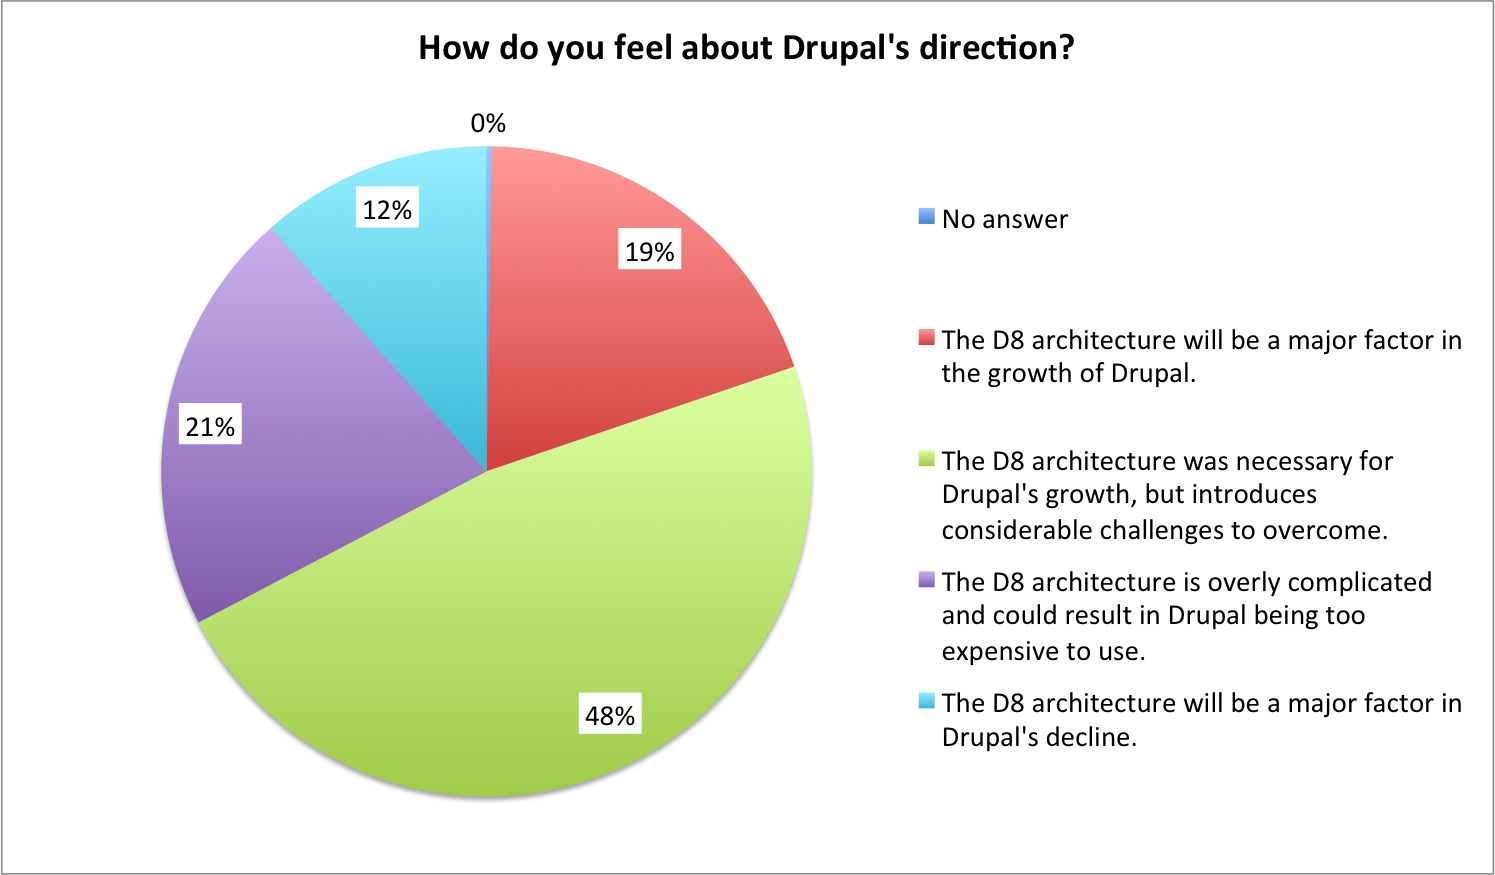  Drupal's Direction